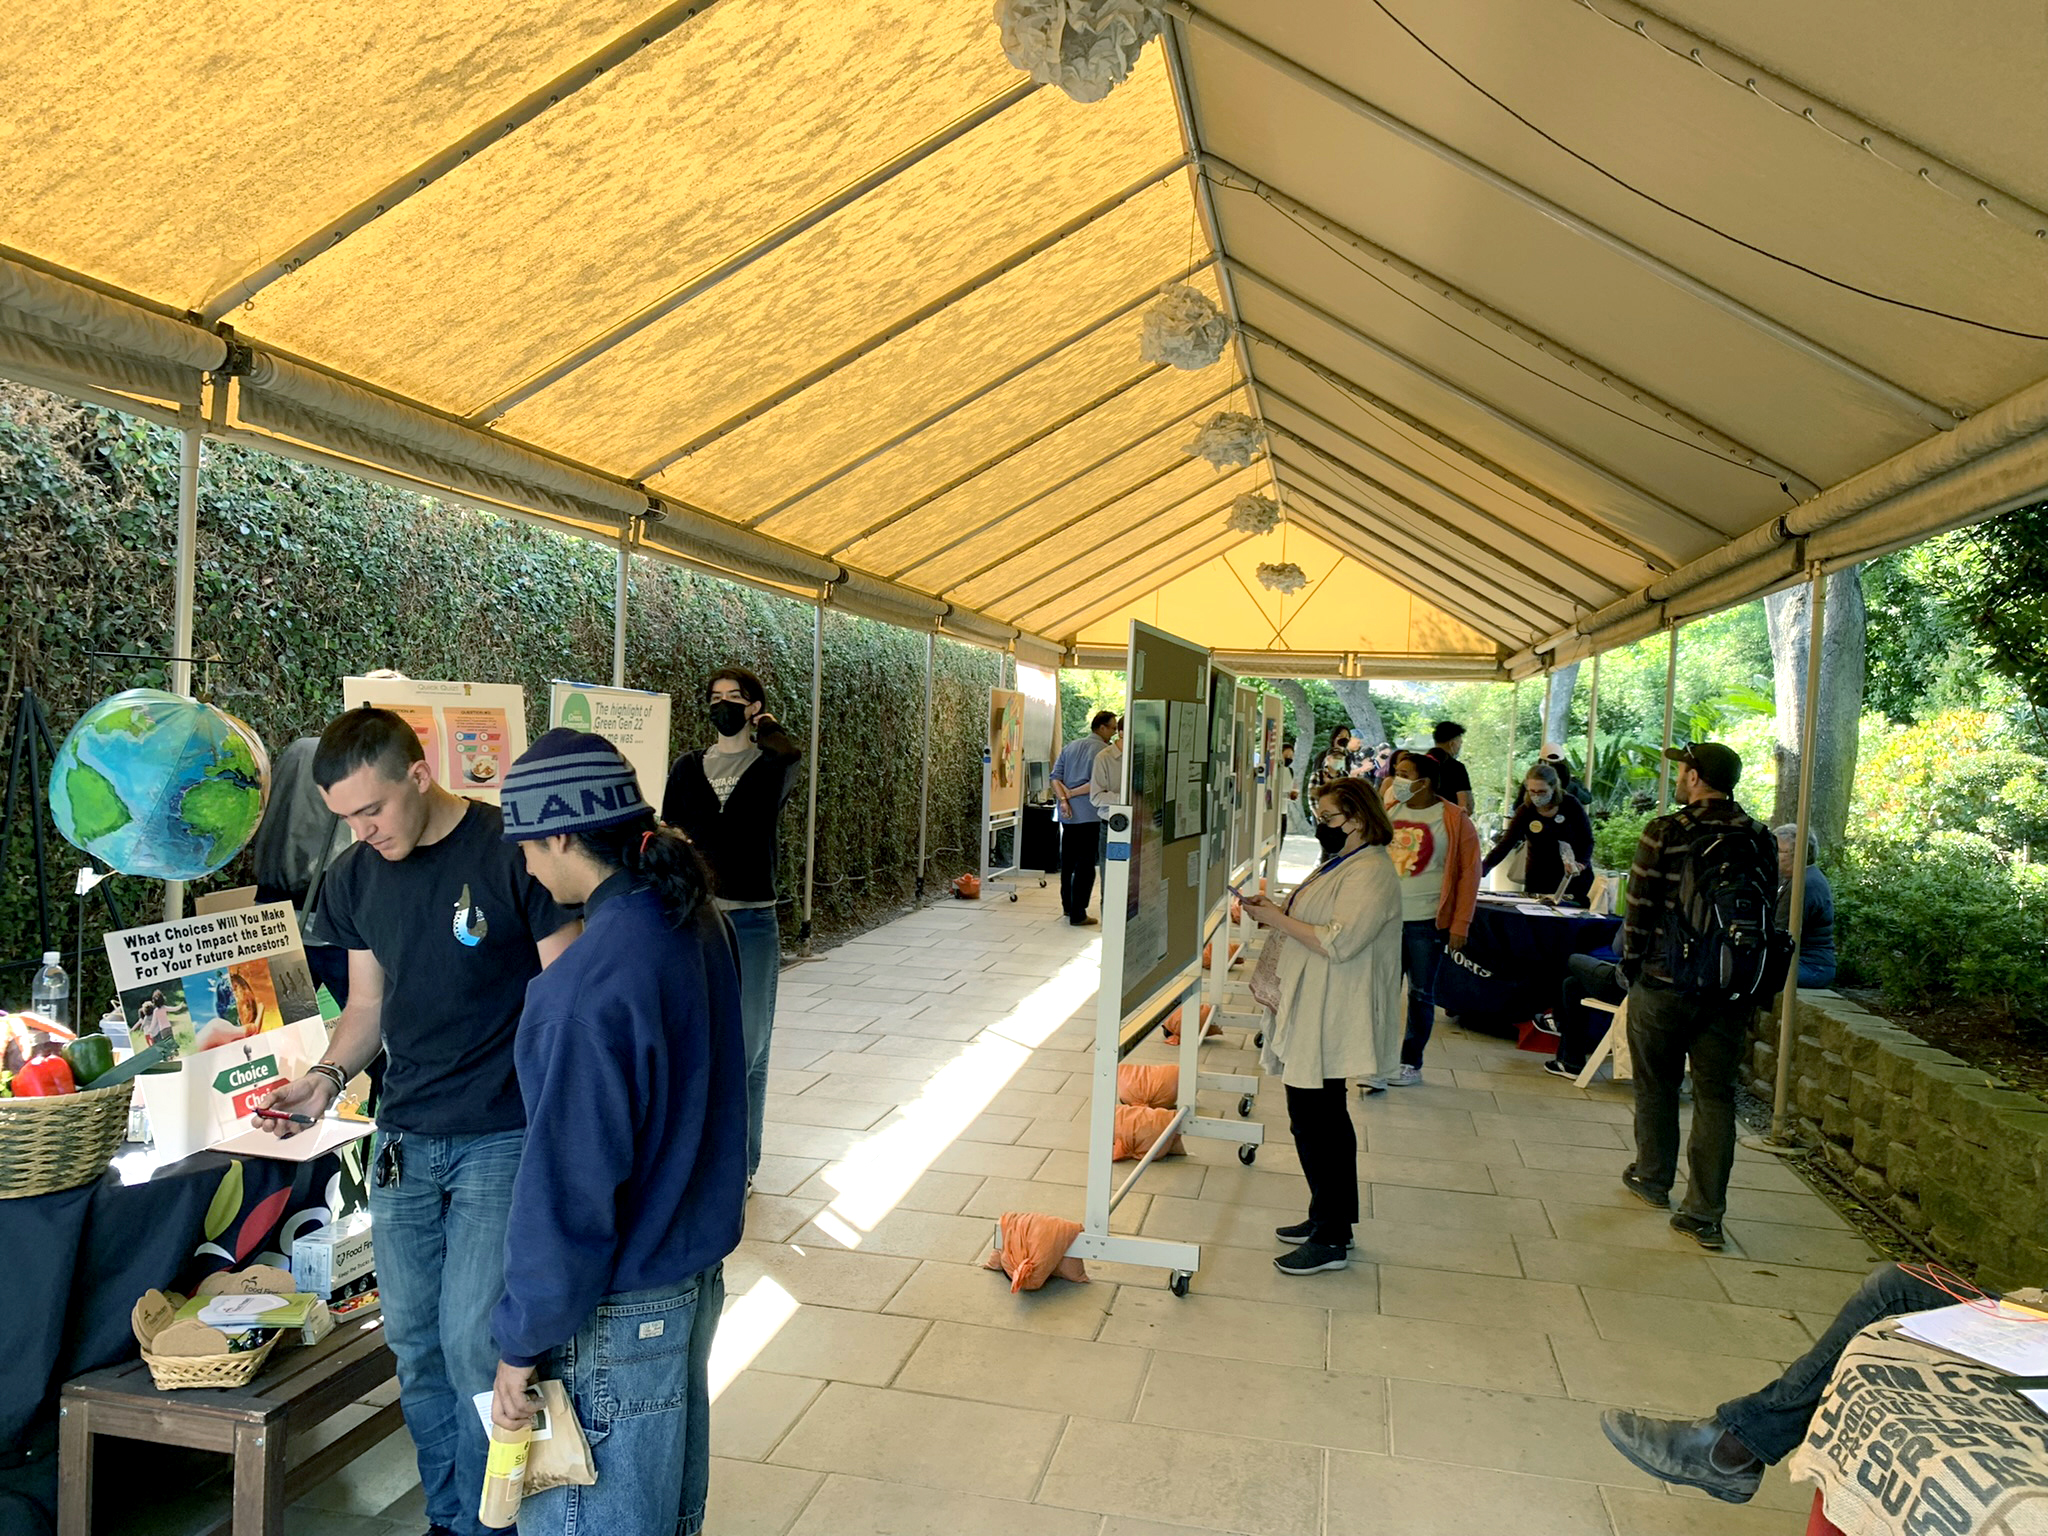 Project Showcase 2022 under Japanese Garden tent area